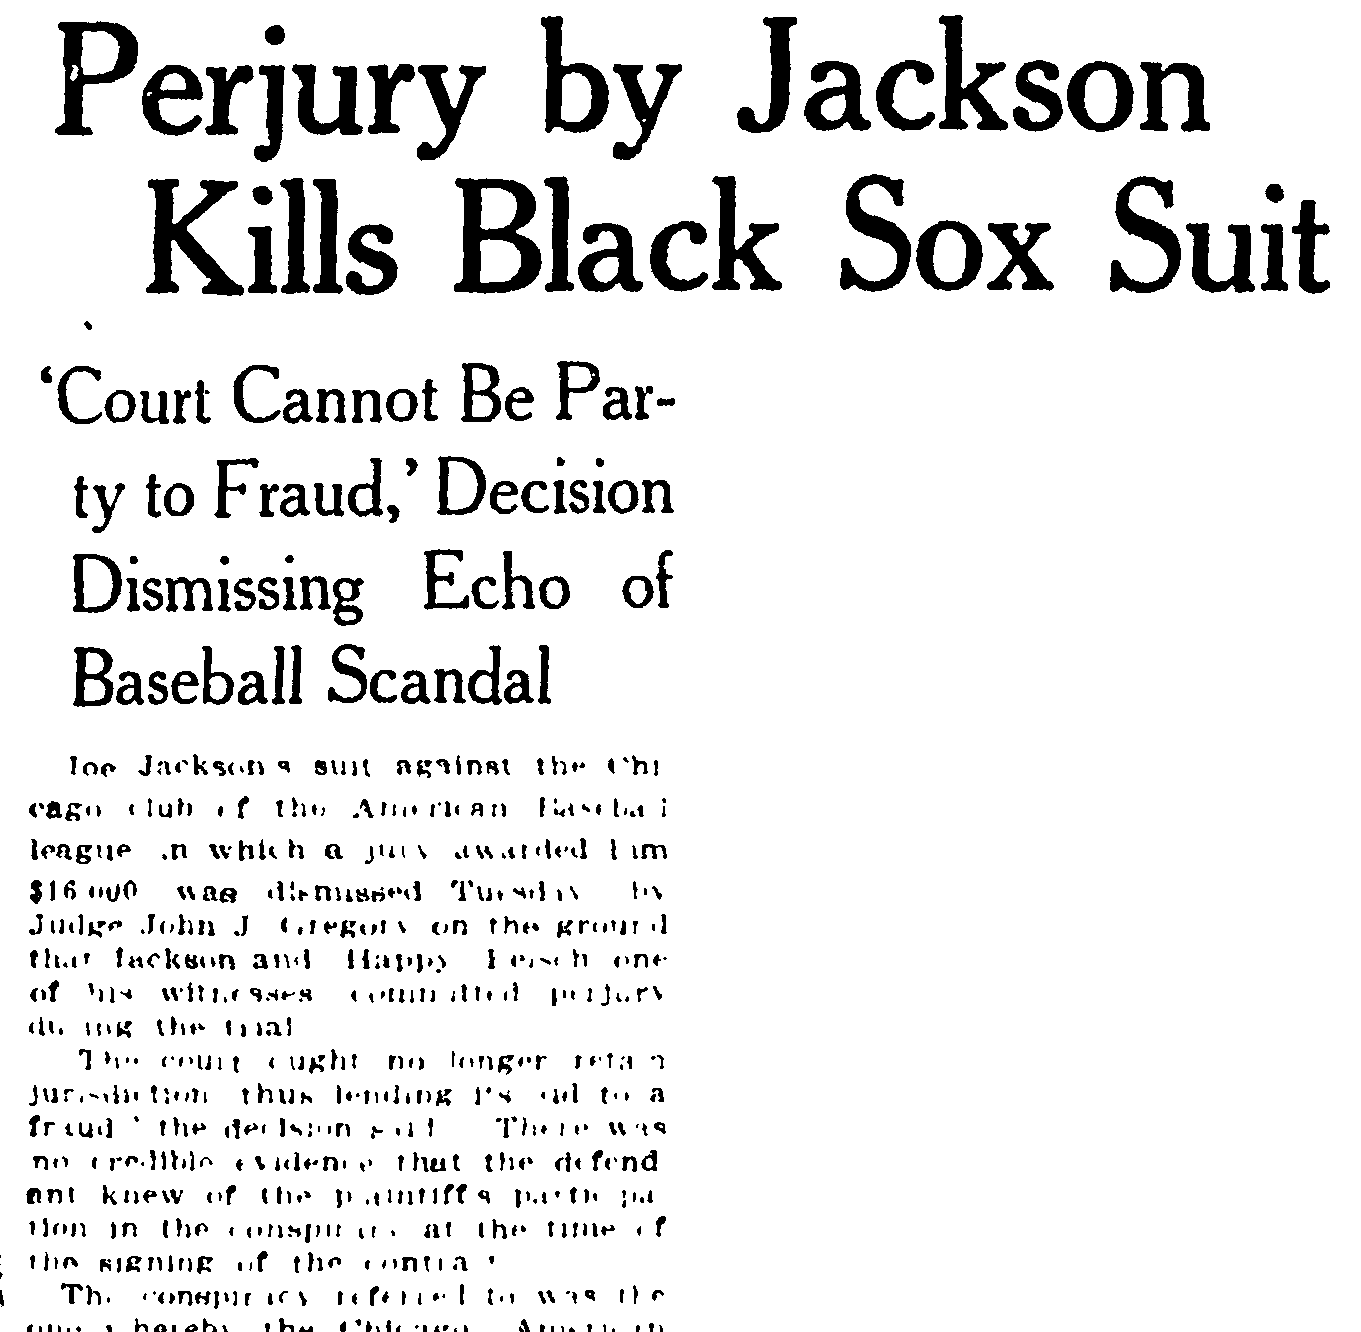 After Black Sox scandal, Joe Jackson and Waycross team played 3